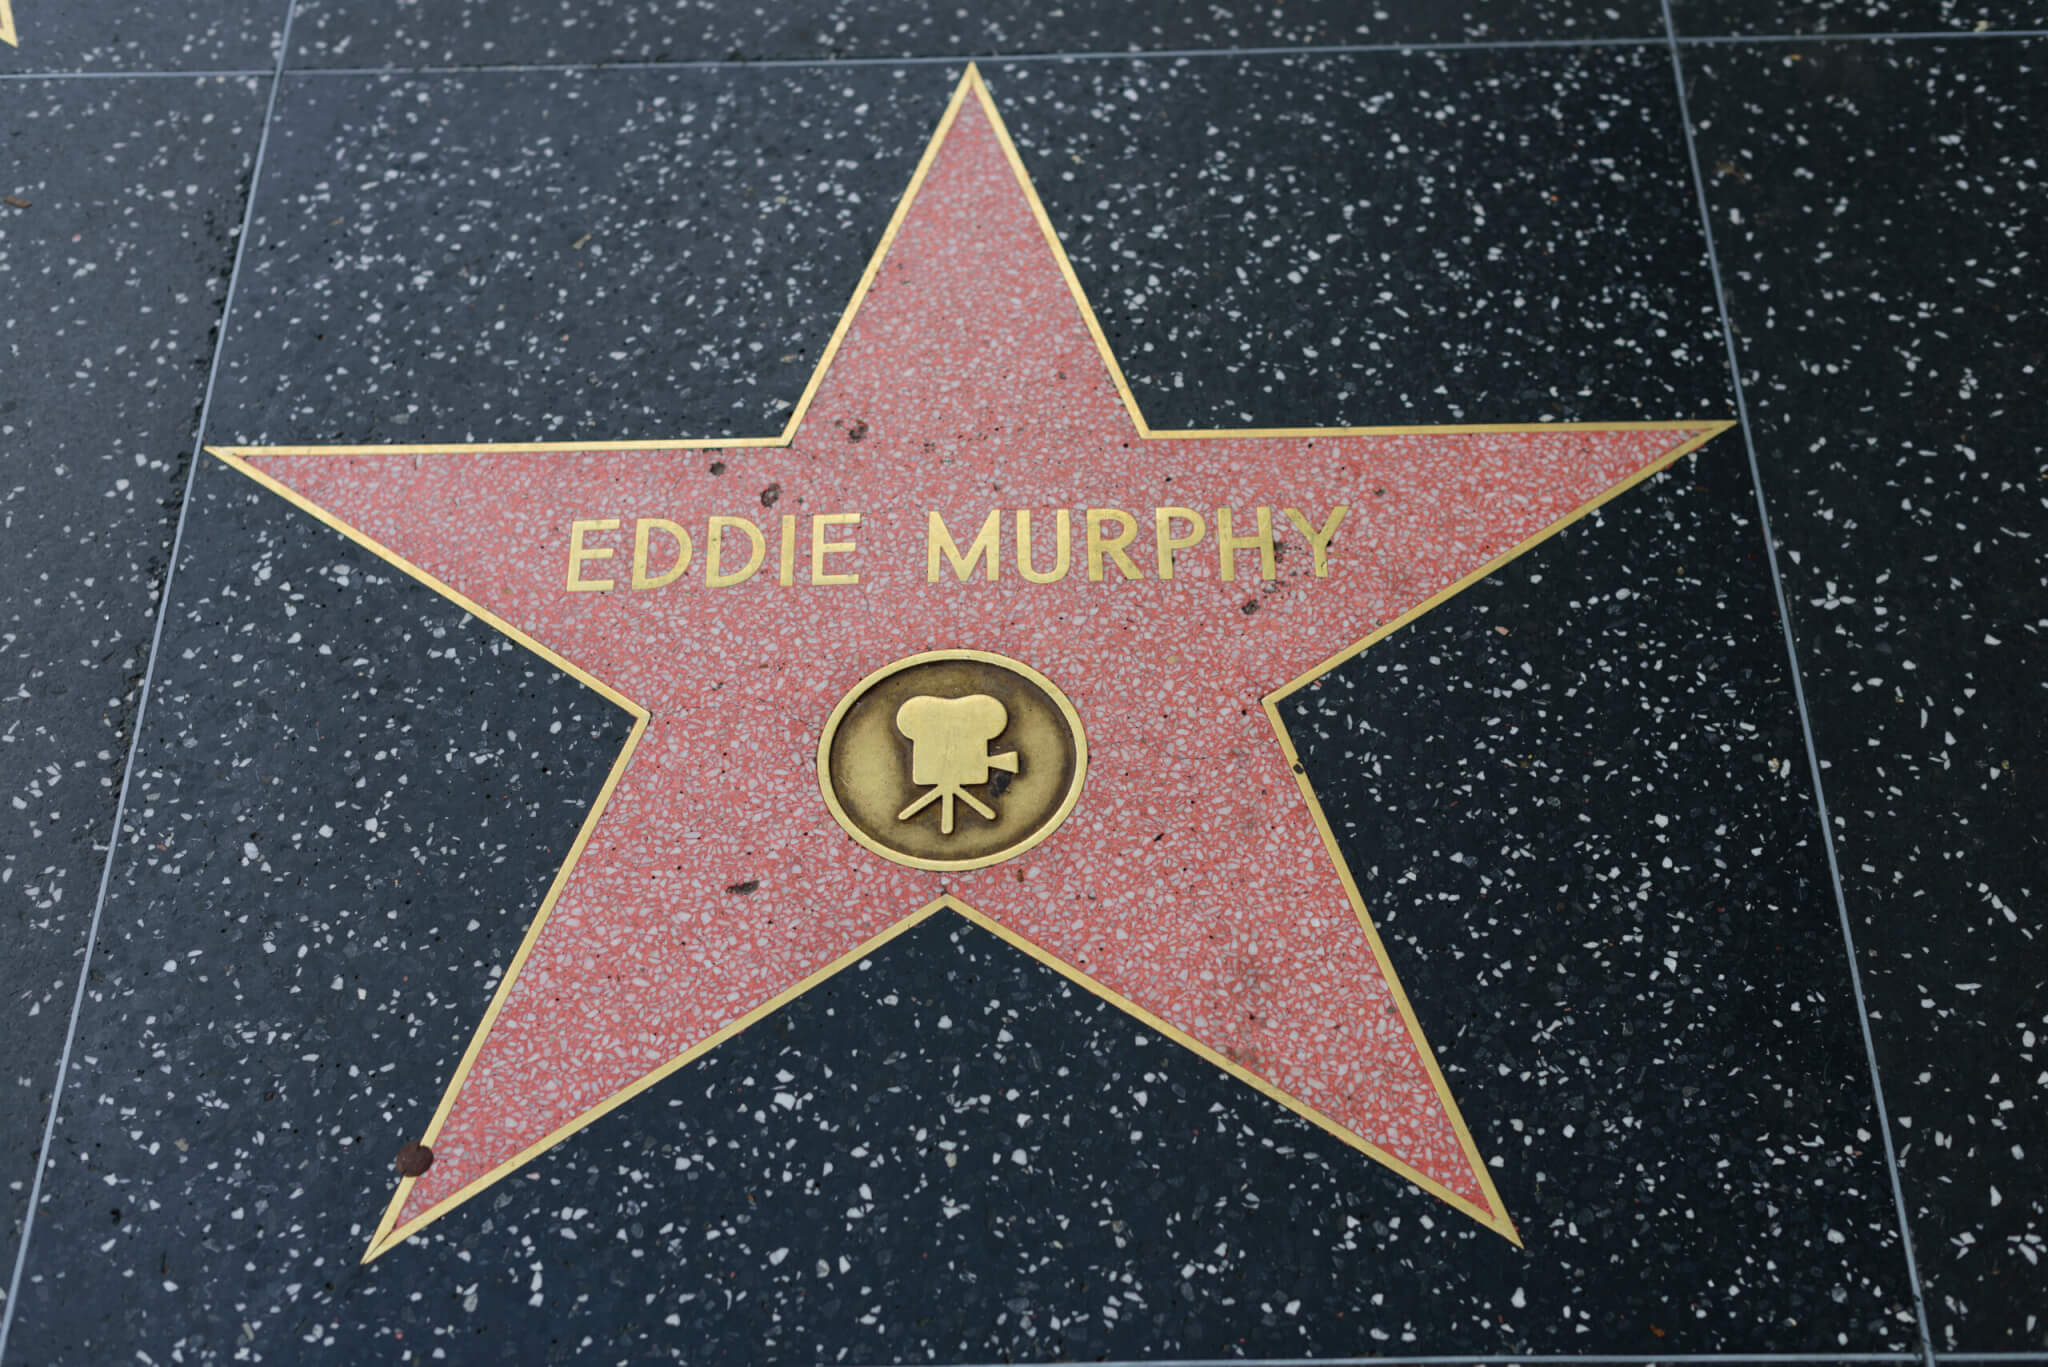 Eddie Murphy's Hollywood Walk of Fame star